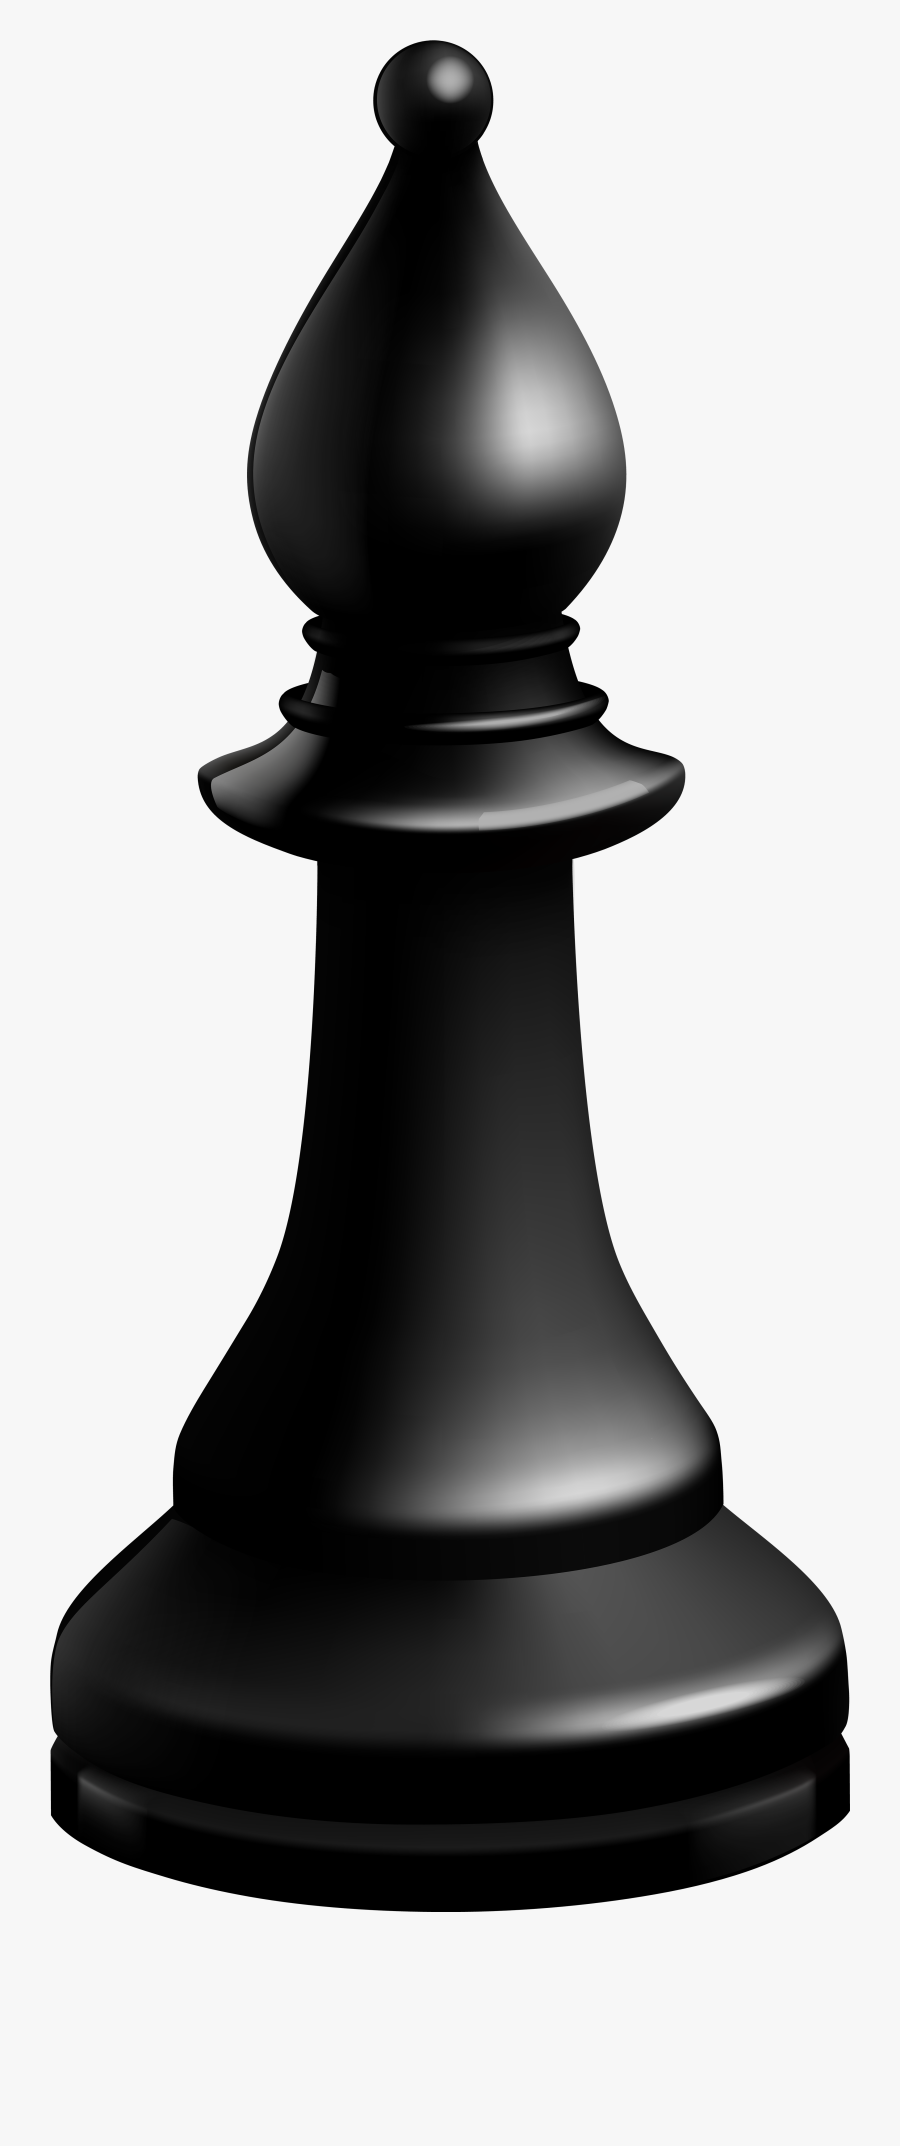 Bishop Black Chess Piece Png Clip Art - Black Bishop Chess Piece, Transparent Clipart